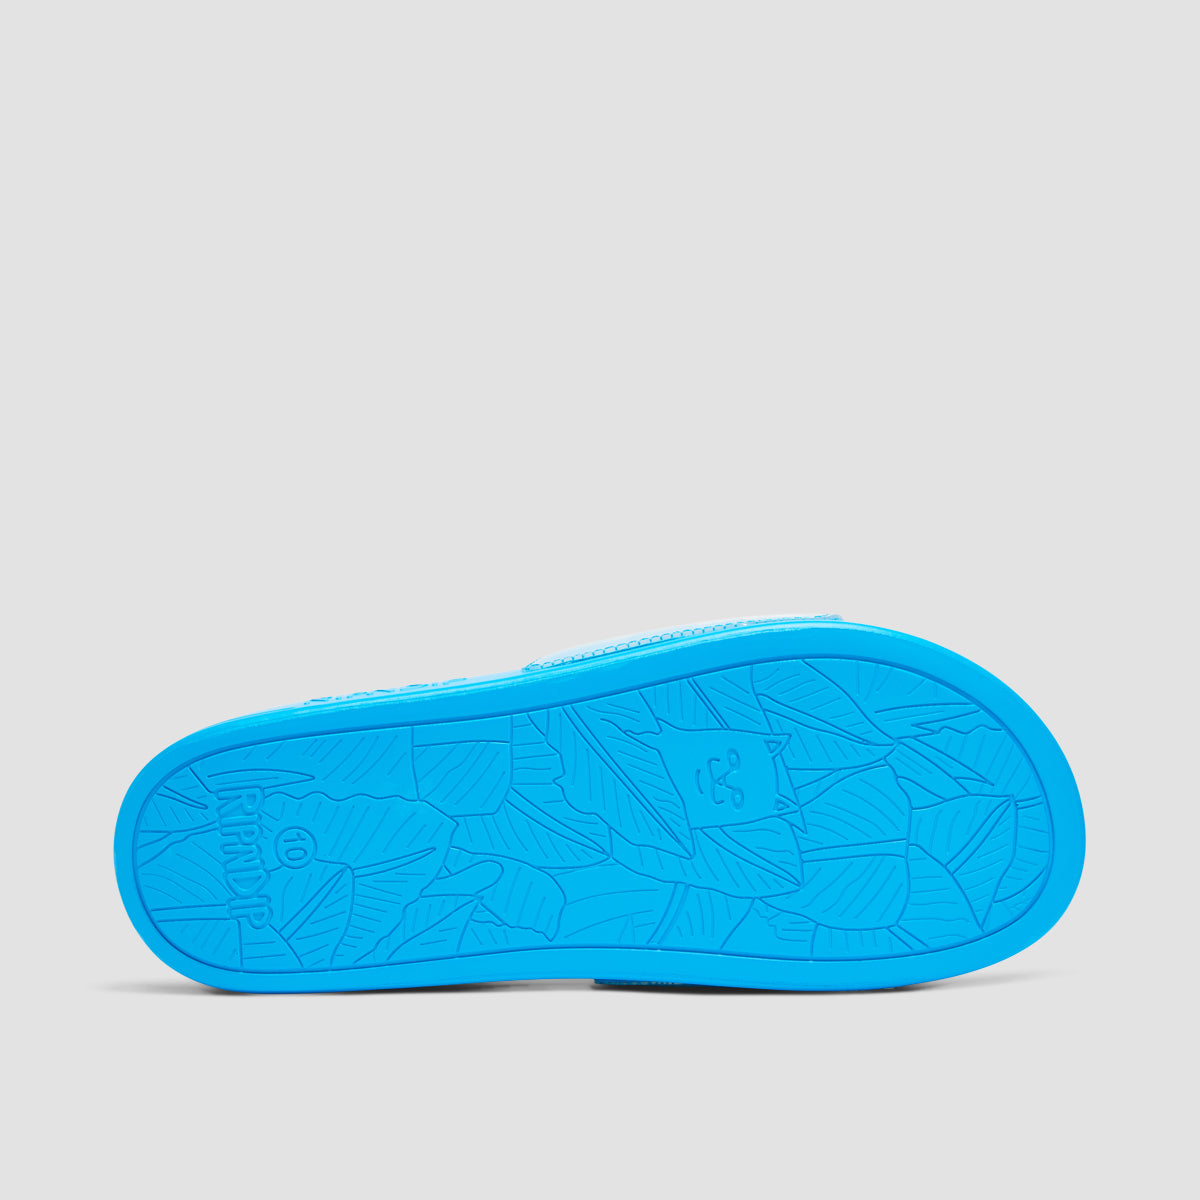 Ripndip Confiscated Slides Sandals -  Blue